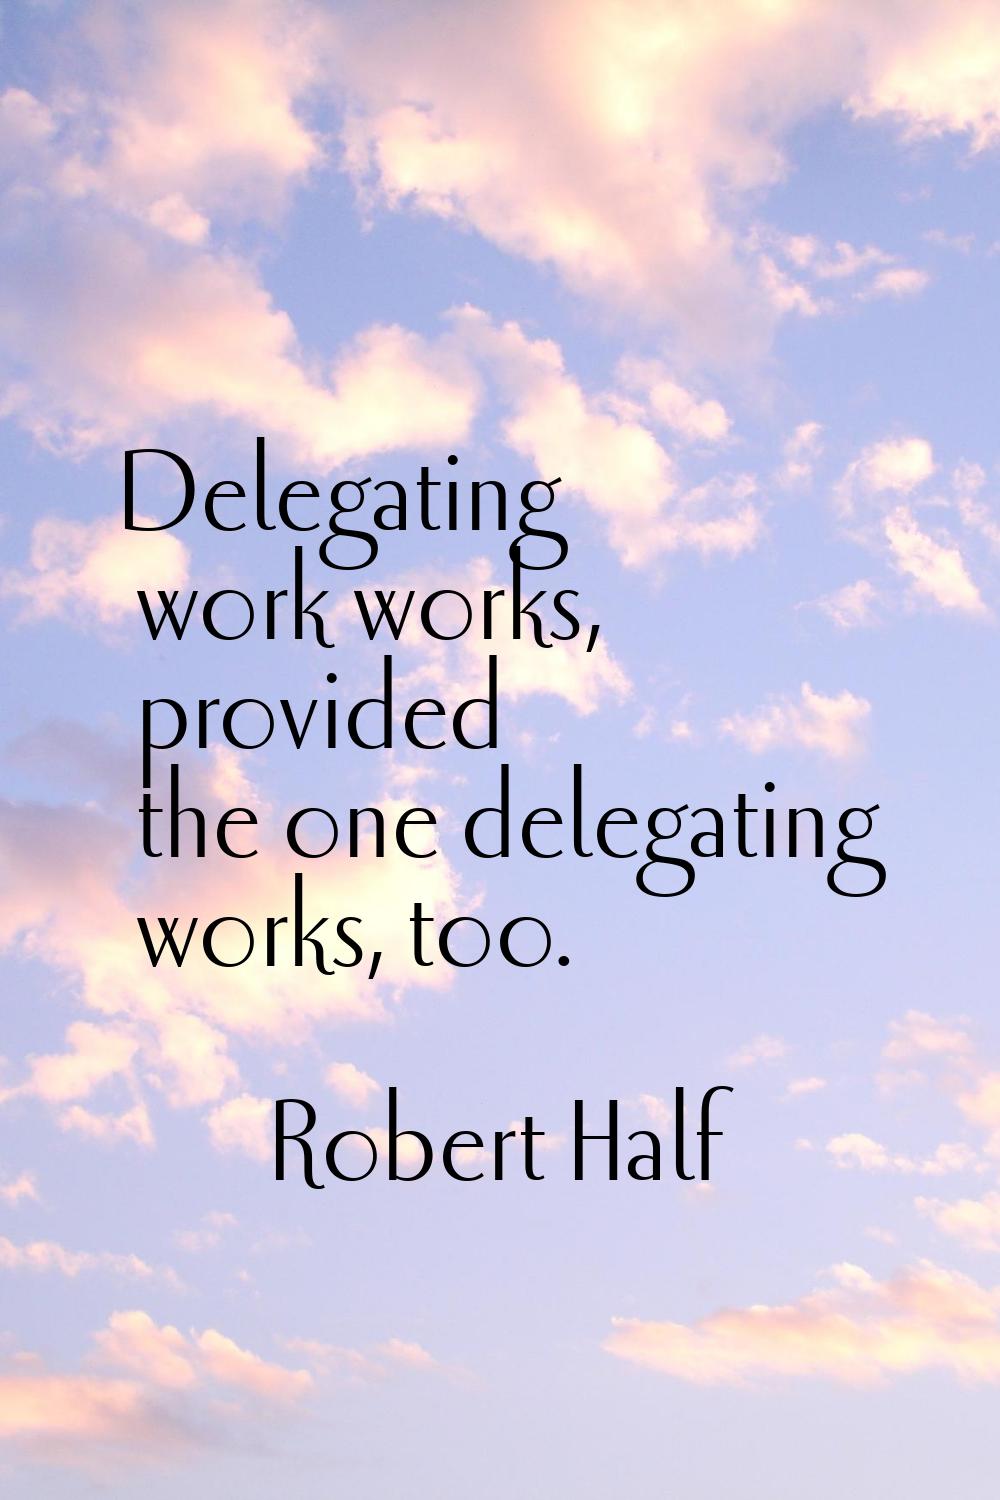 Delegating work works, provided the one delegating works, too.